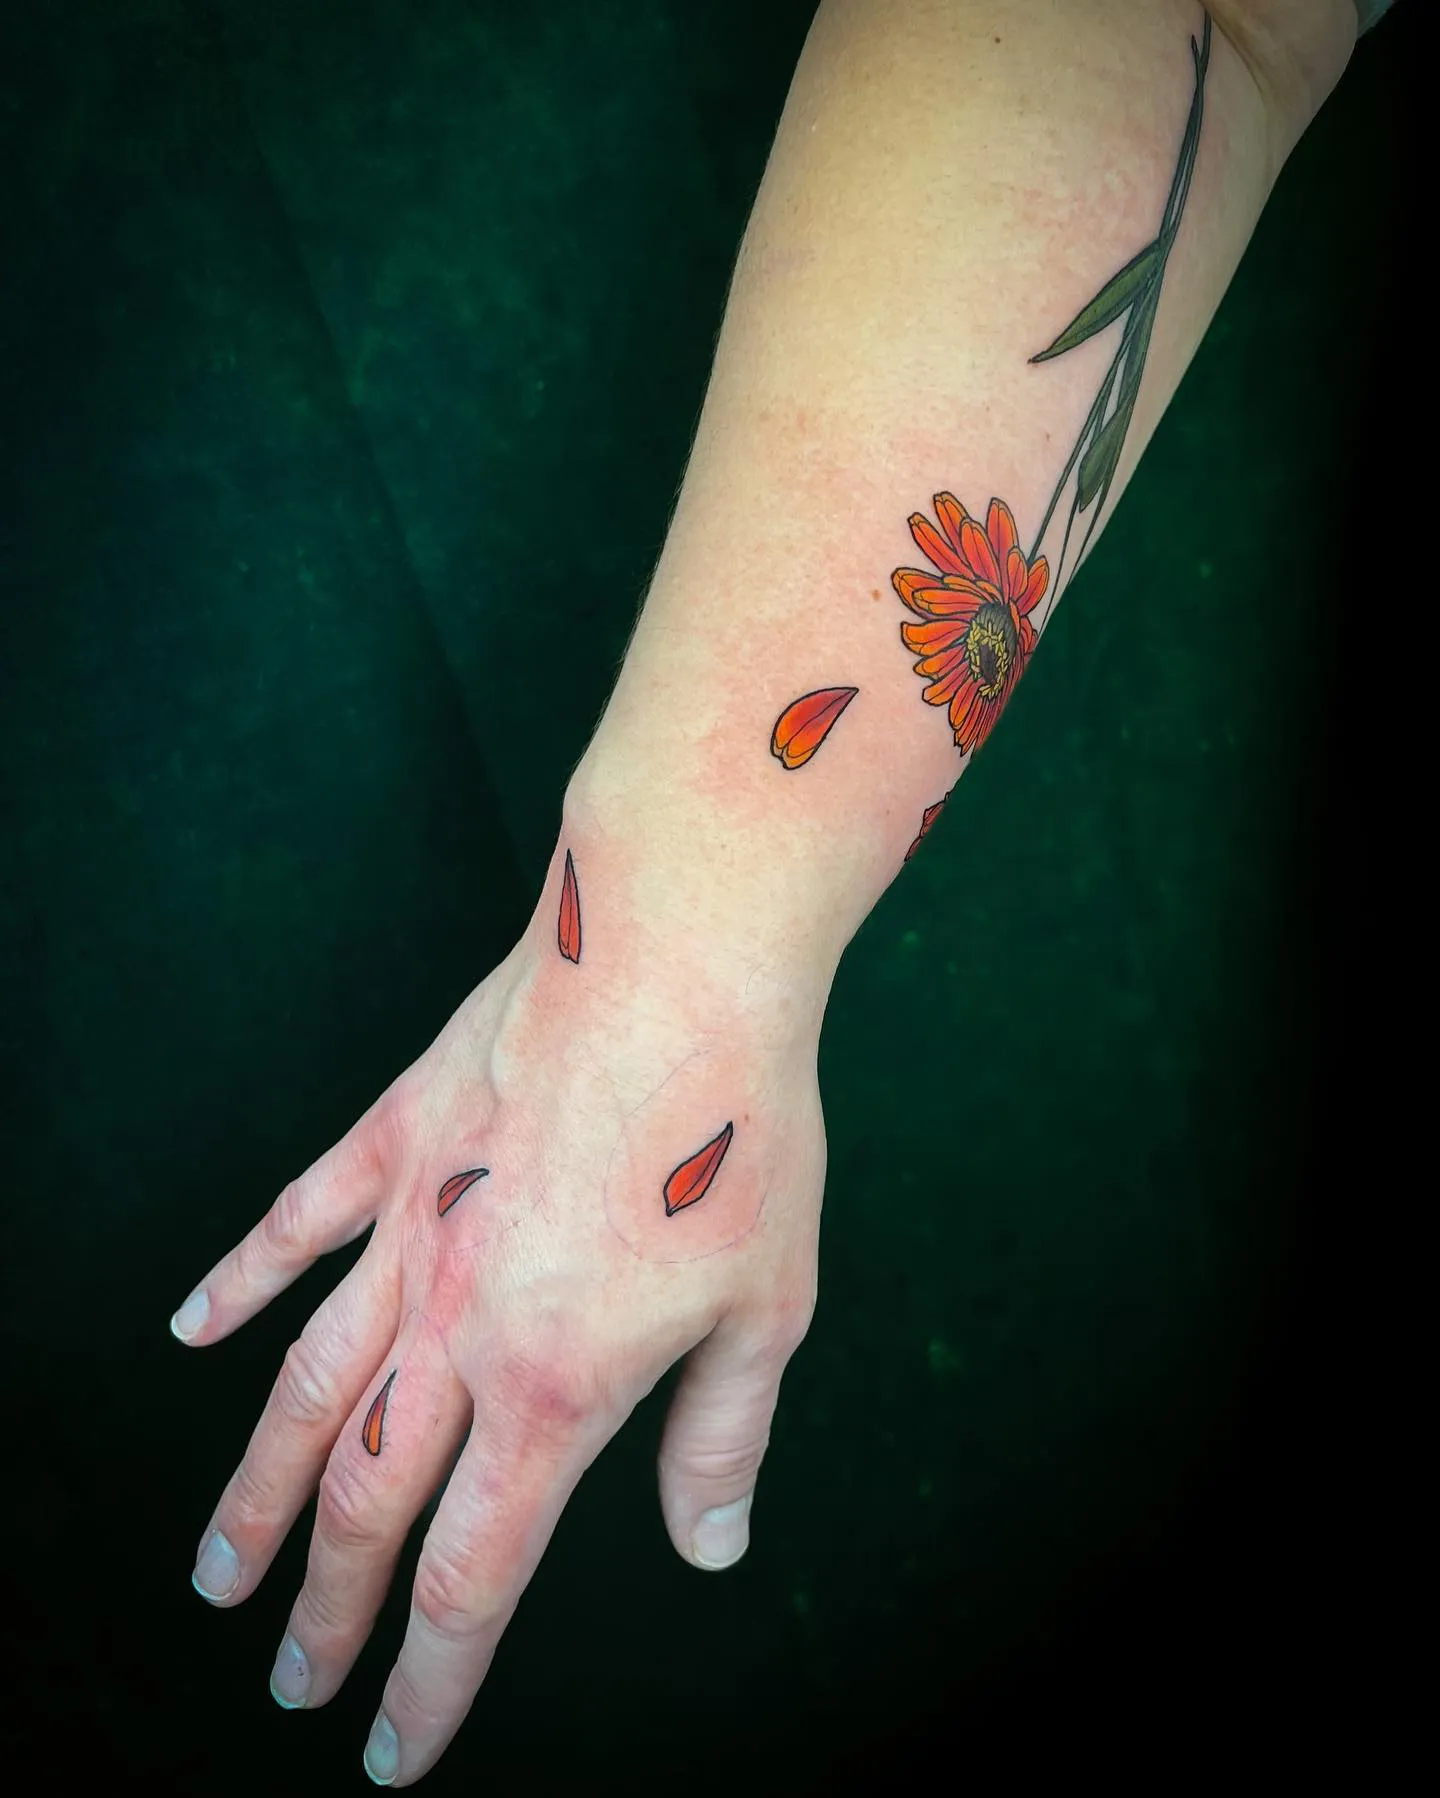 Zinnia tattoo with falling petals on hand